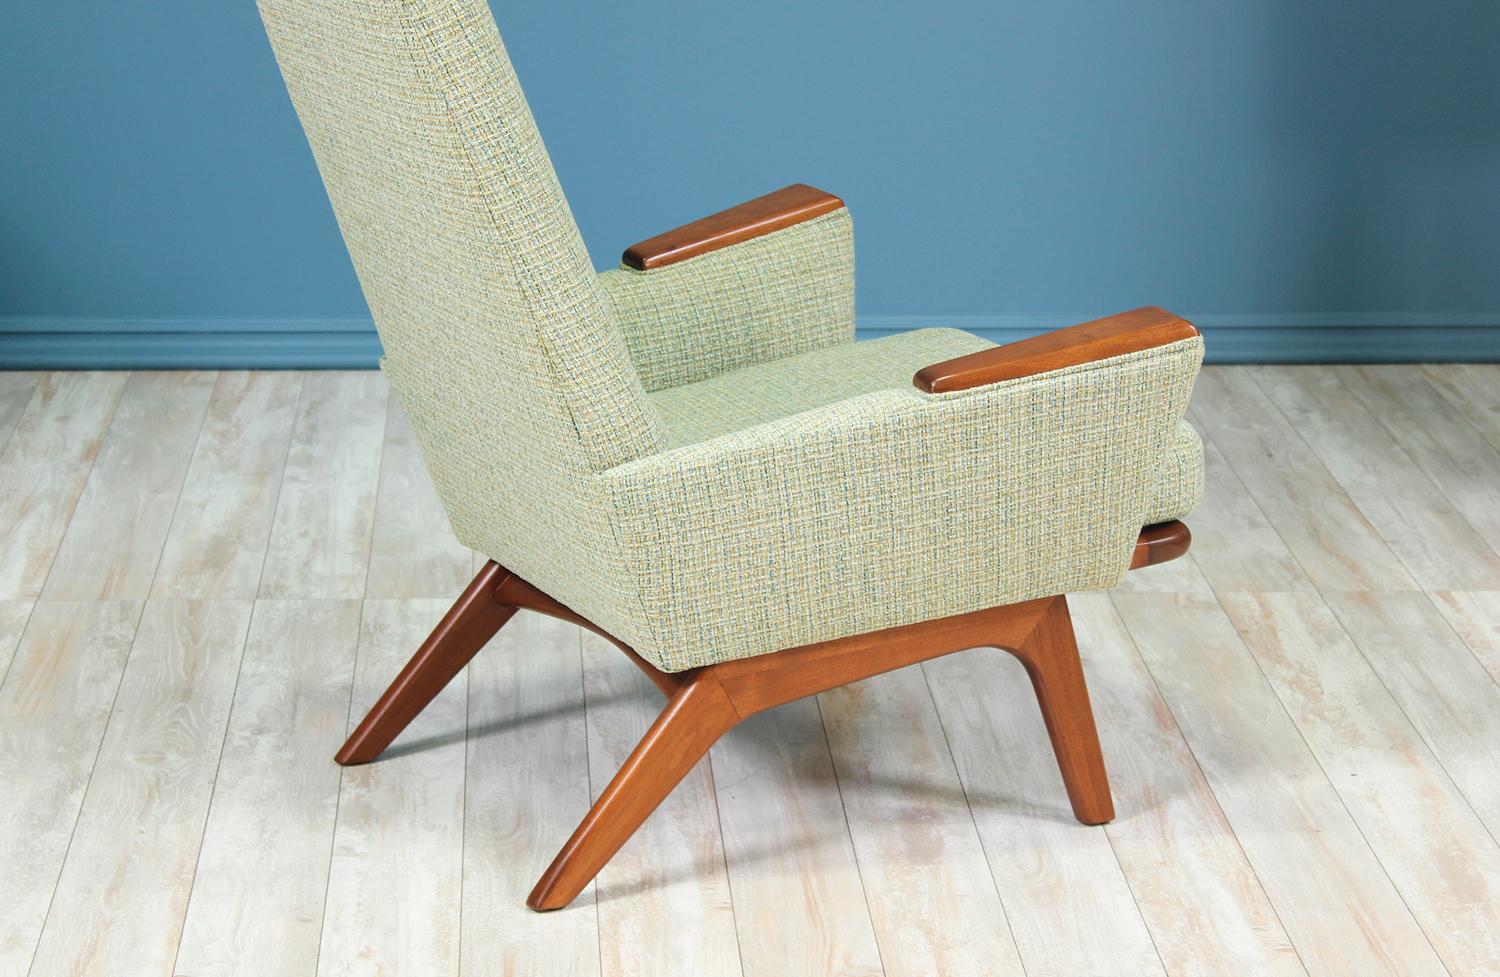 Fabric Adrian Pearsall “Slim Jim” High-Back Chair for Craft Associates